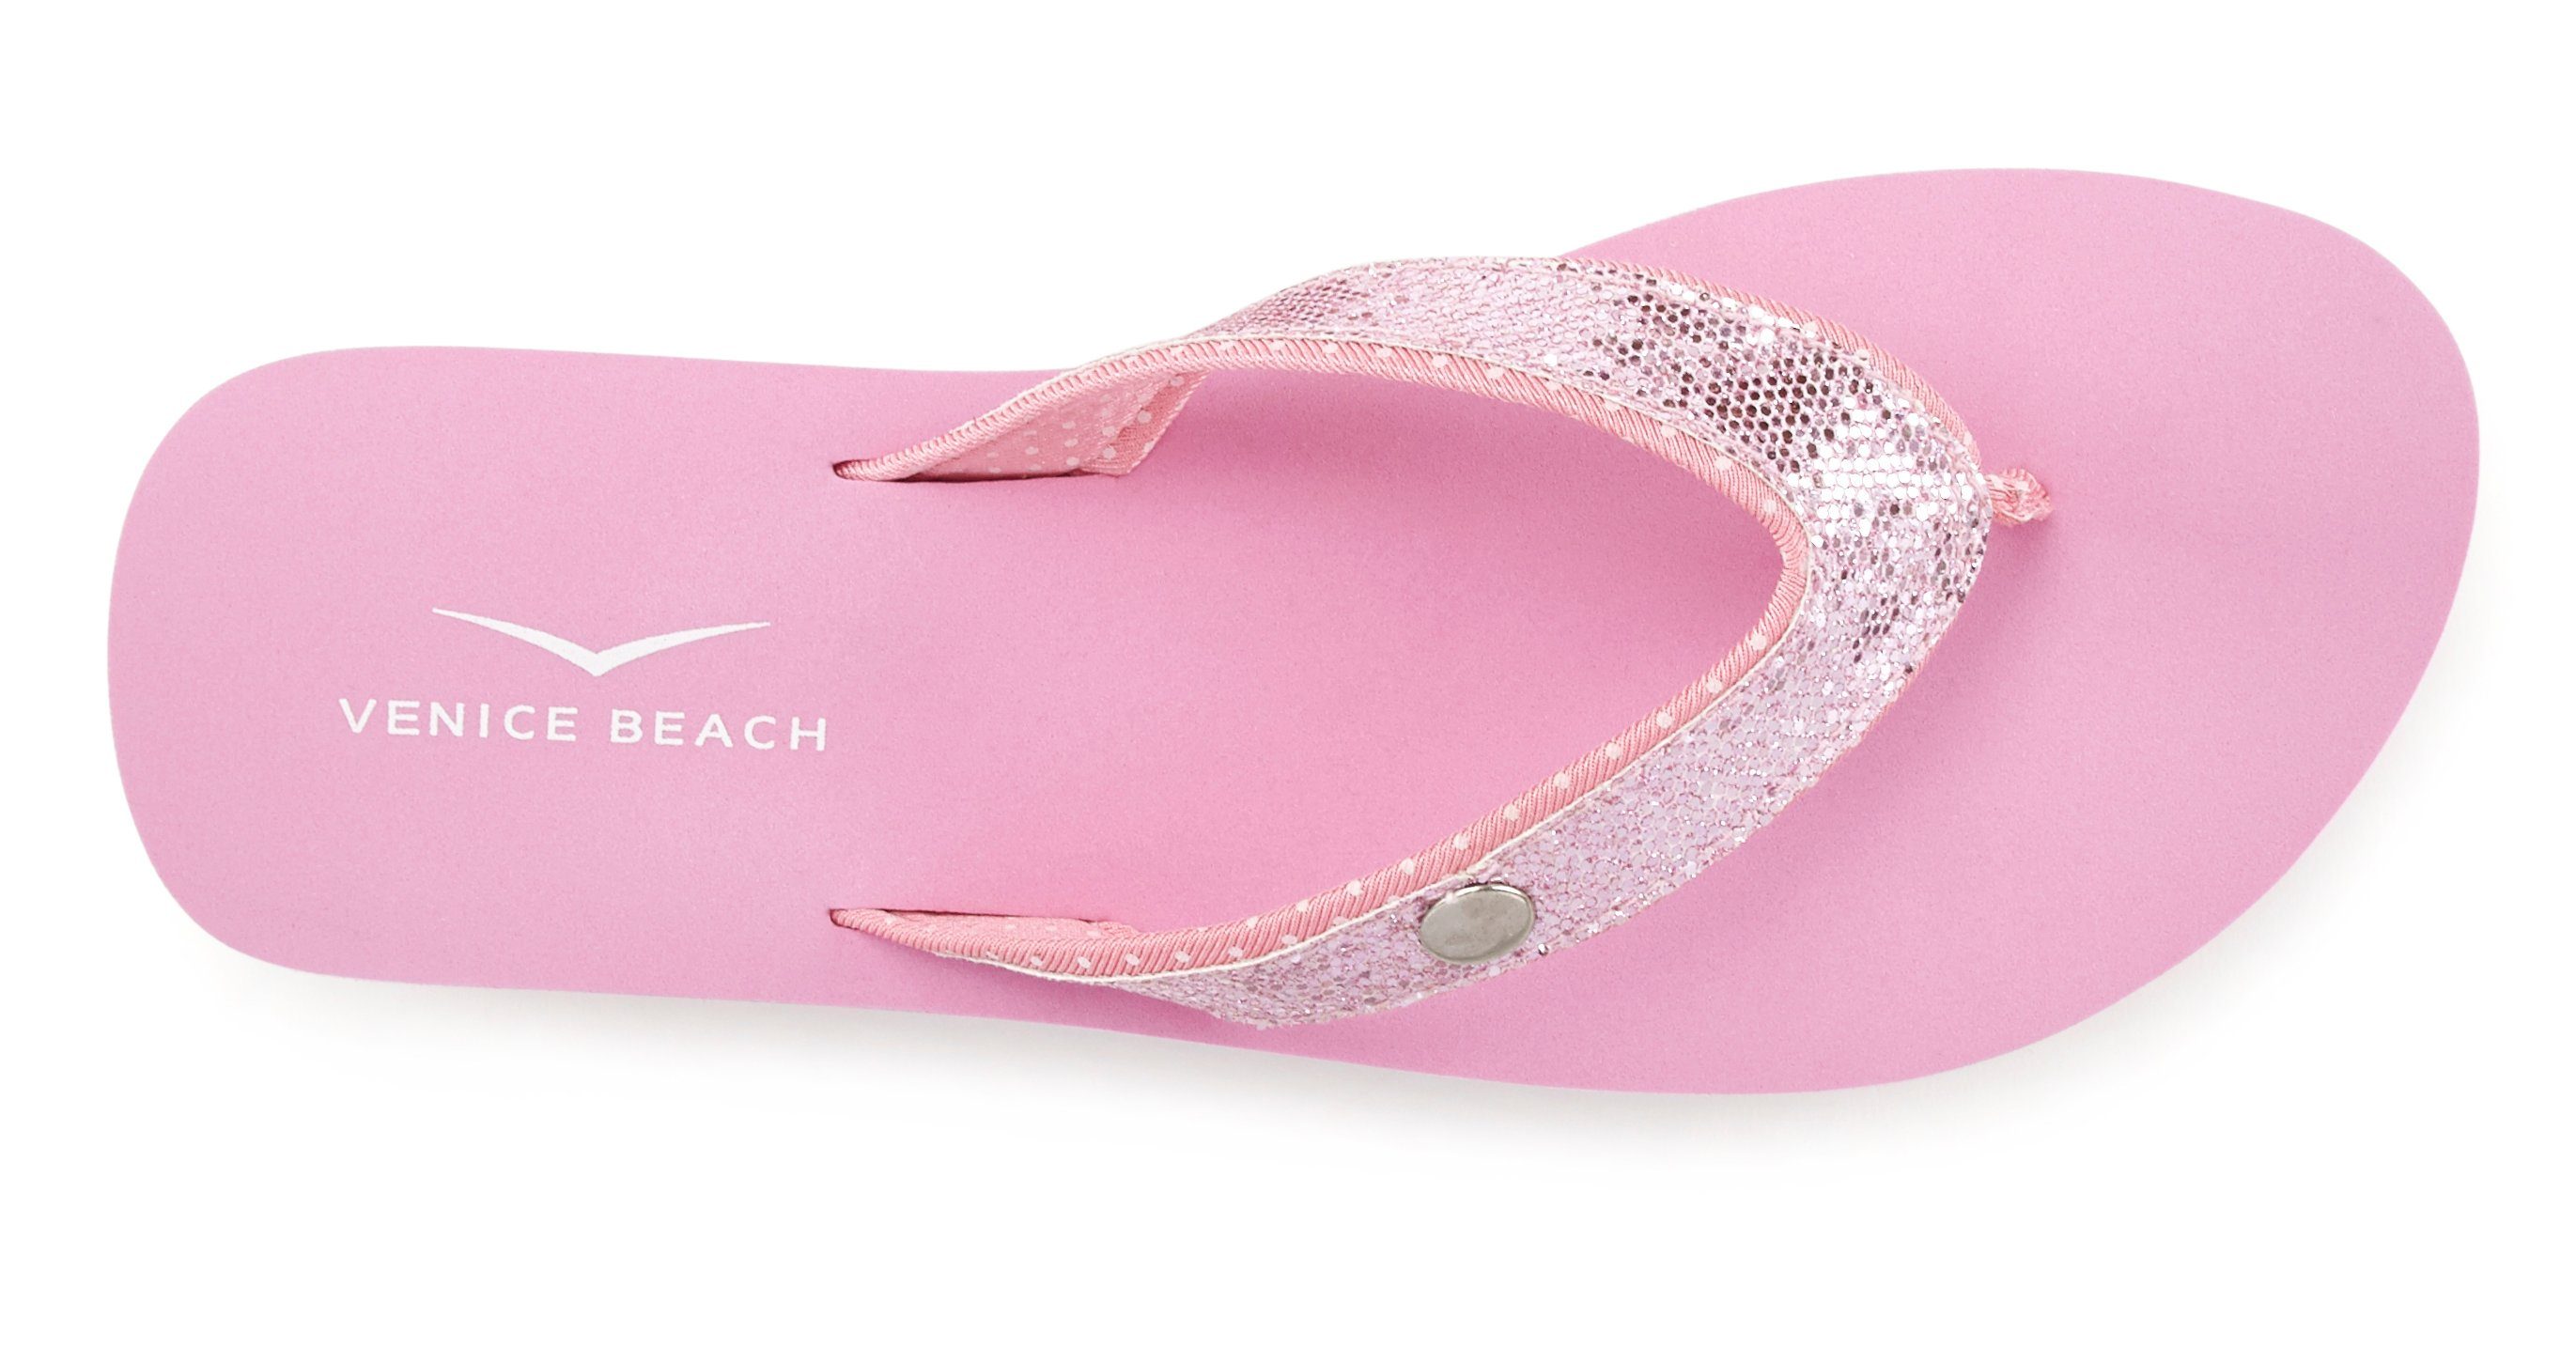 Venice Beach Badezehentrenner Glitzerband VEGAN rosé mit Badeschuh ultraleicht Sandale, Pantolette